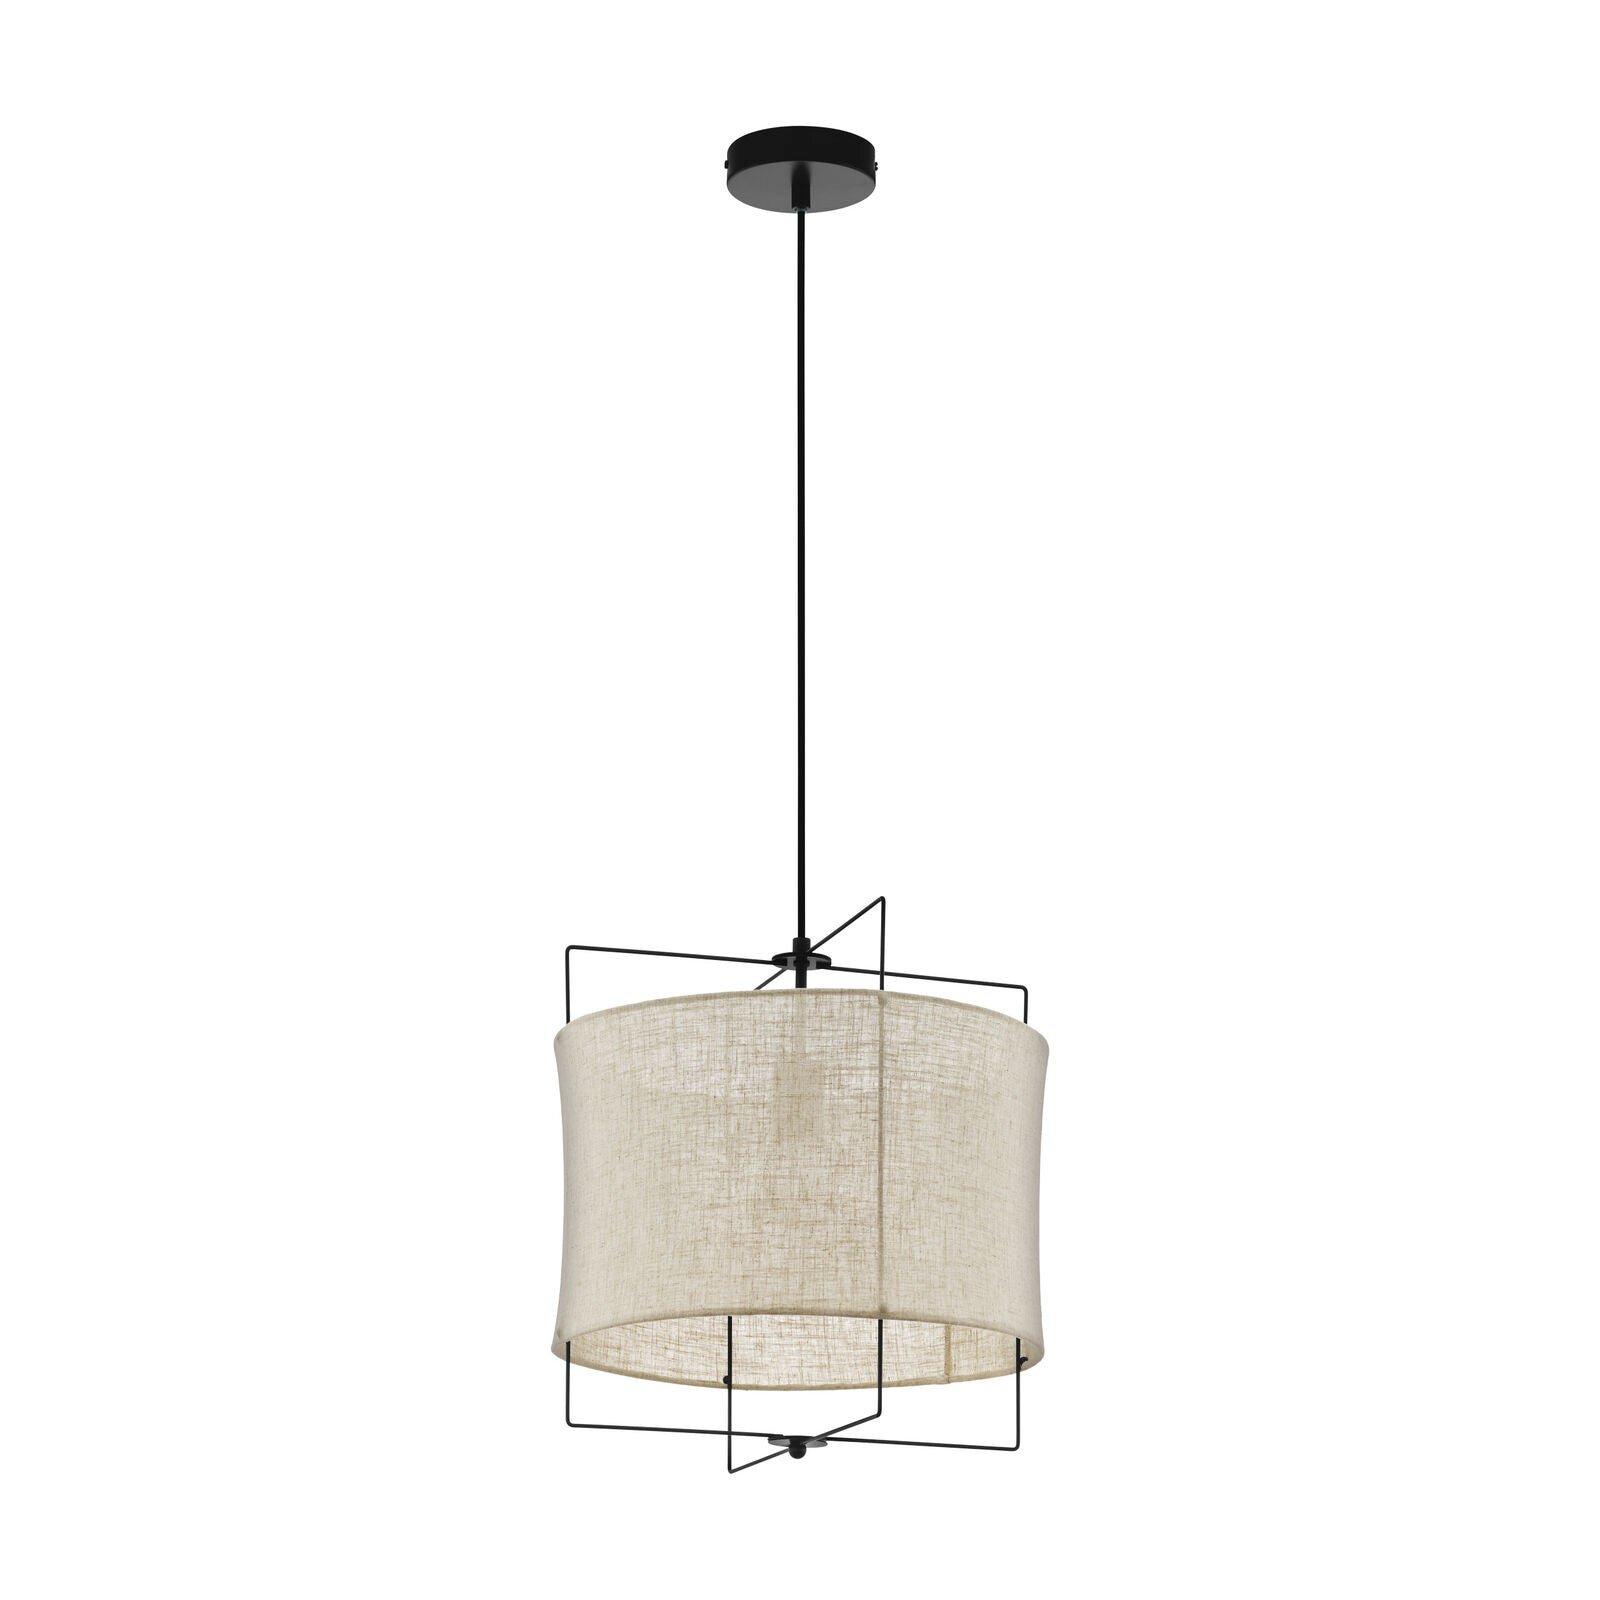 Hanging Ceiling Pendant Light Black & Linen Shade 1x 40W E27 Feature Lamp